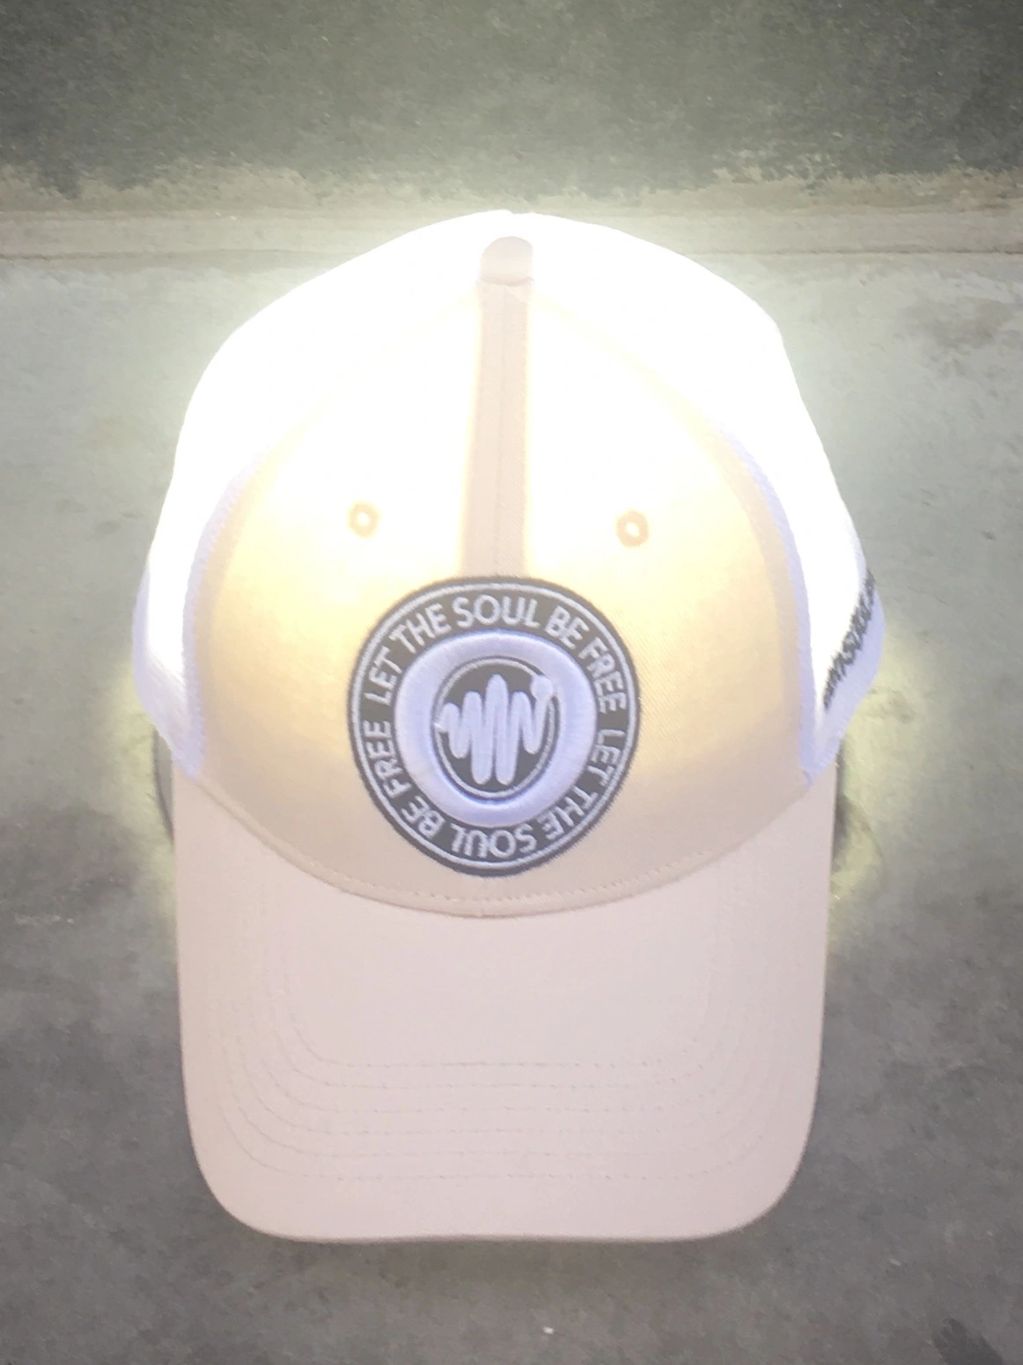 A light on the floor shining through a conSOULscious cap